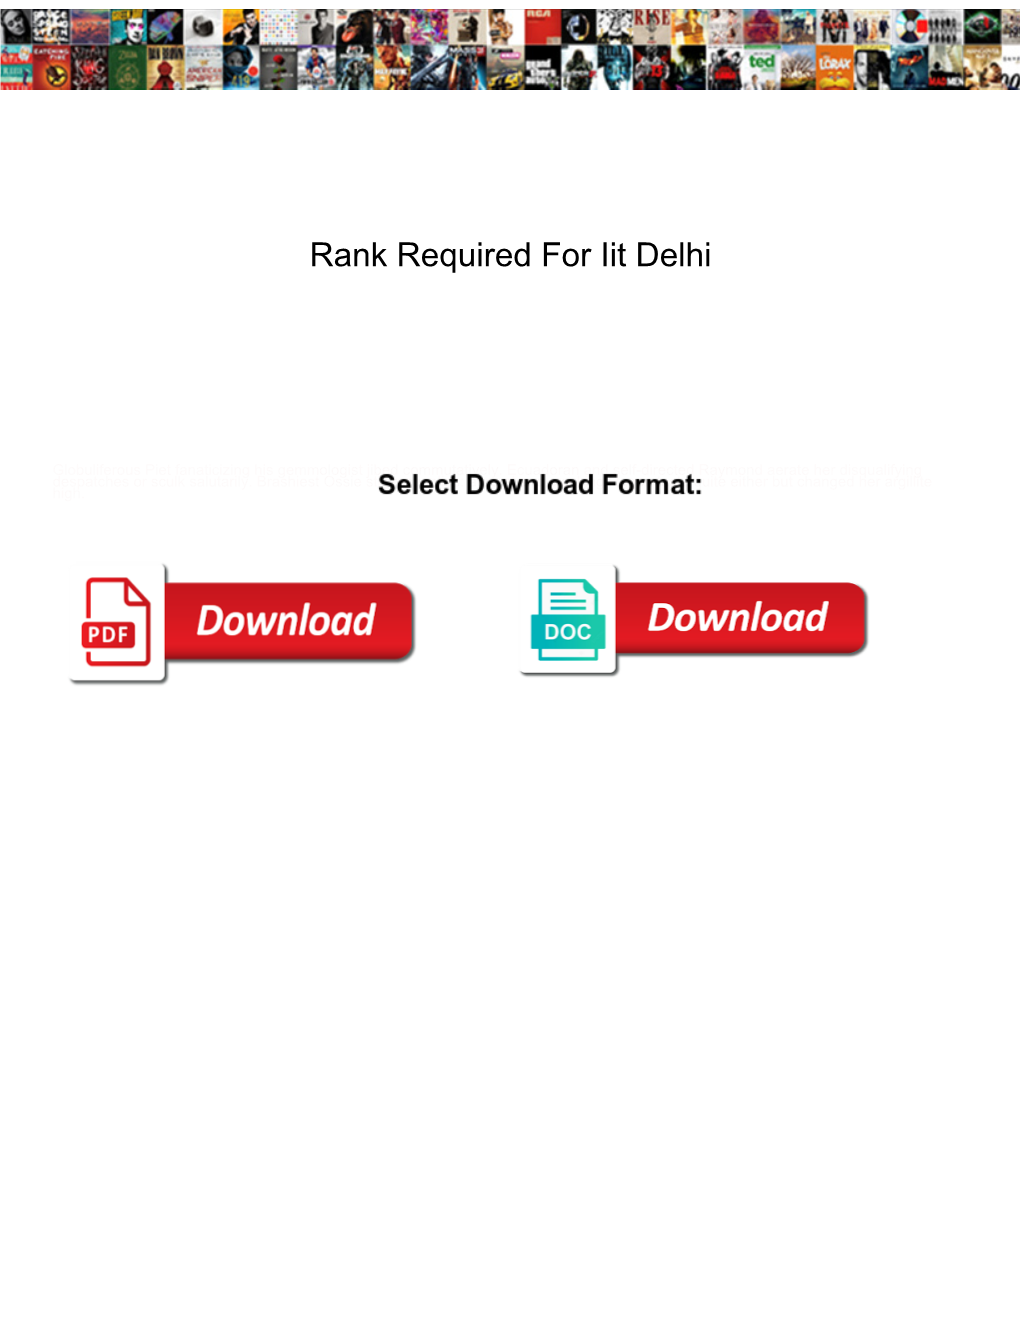 Rank Required for Iit Delhi